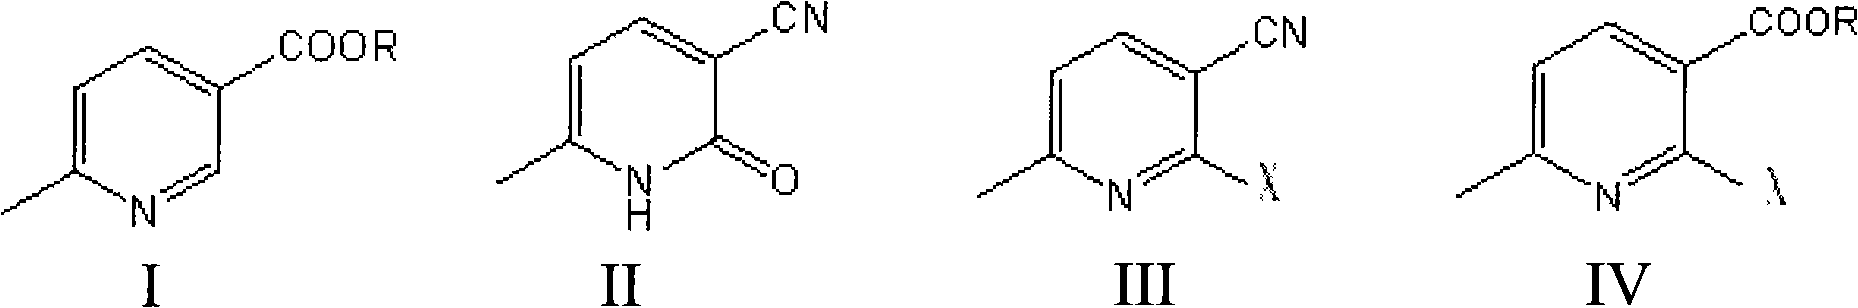 Method for preparing 6-methylnicotinic acid etoricoxib intermediate and ester thereof